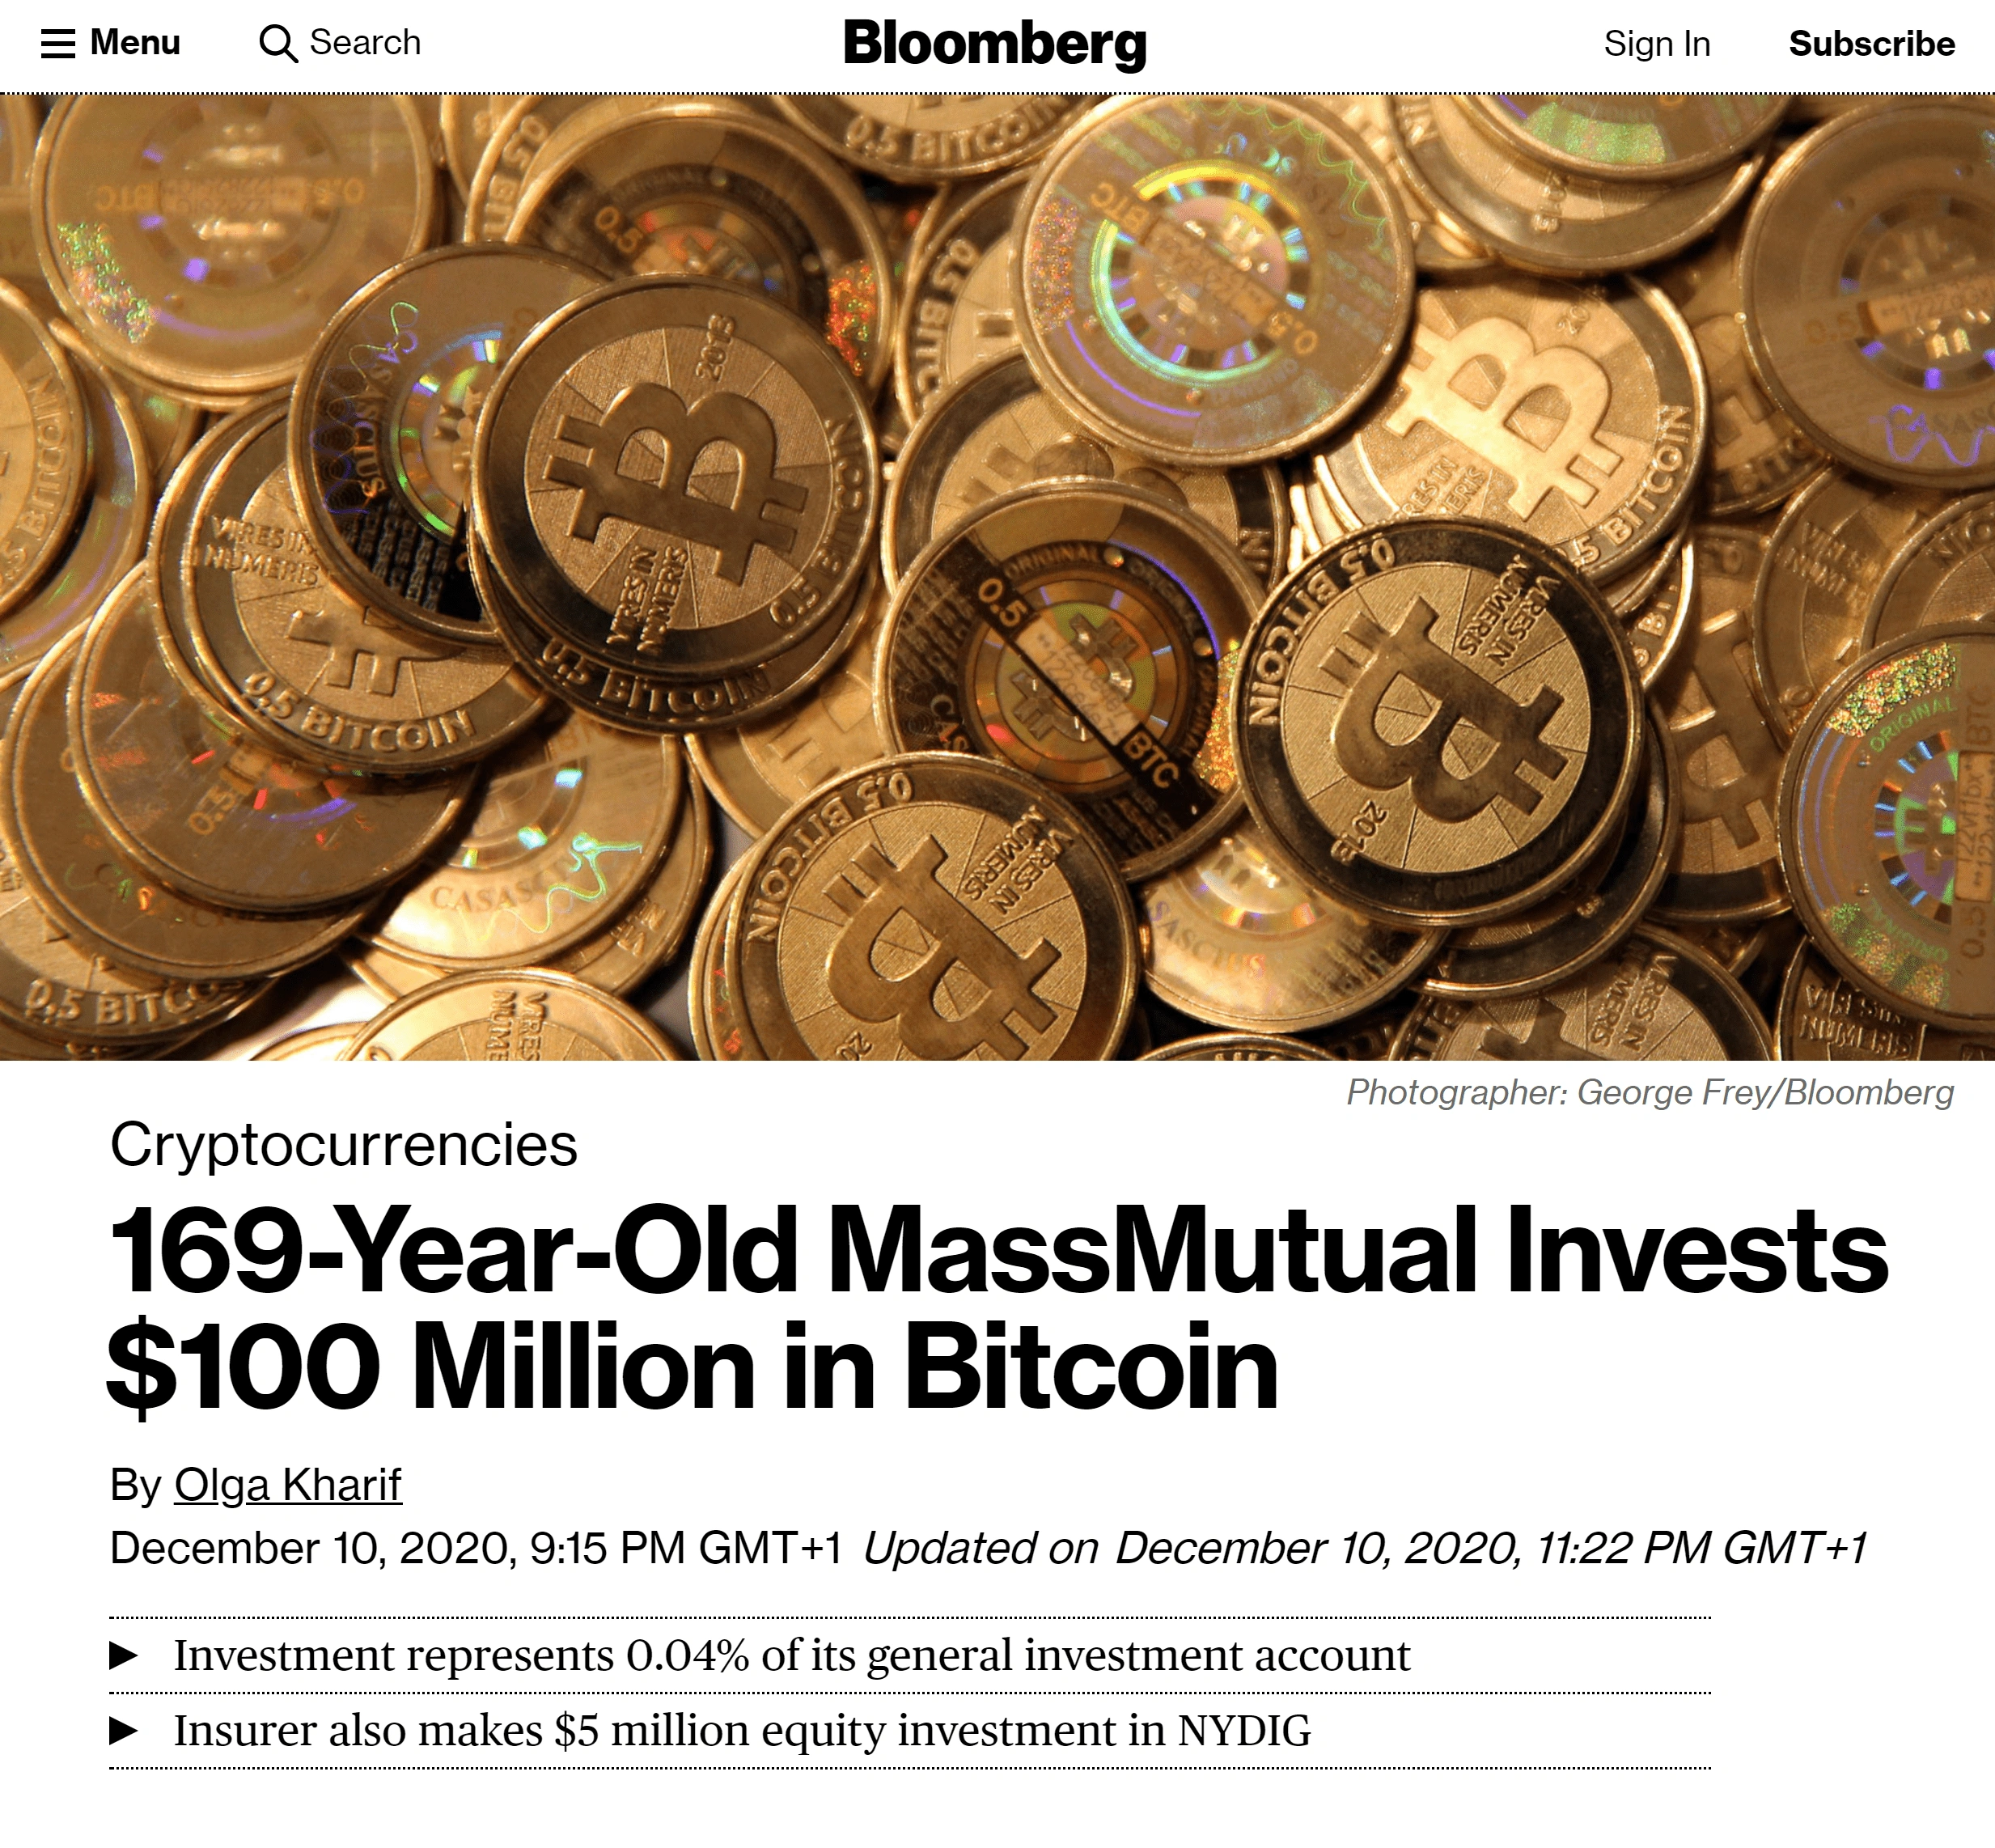 massmutual-invests-100-million-in-bit...